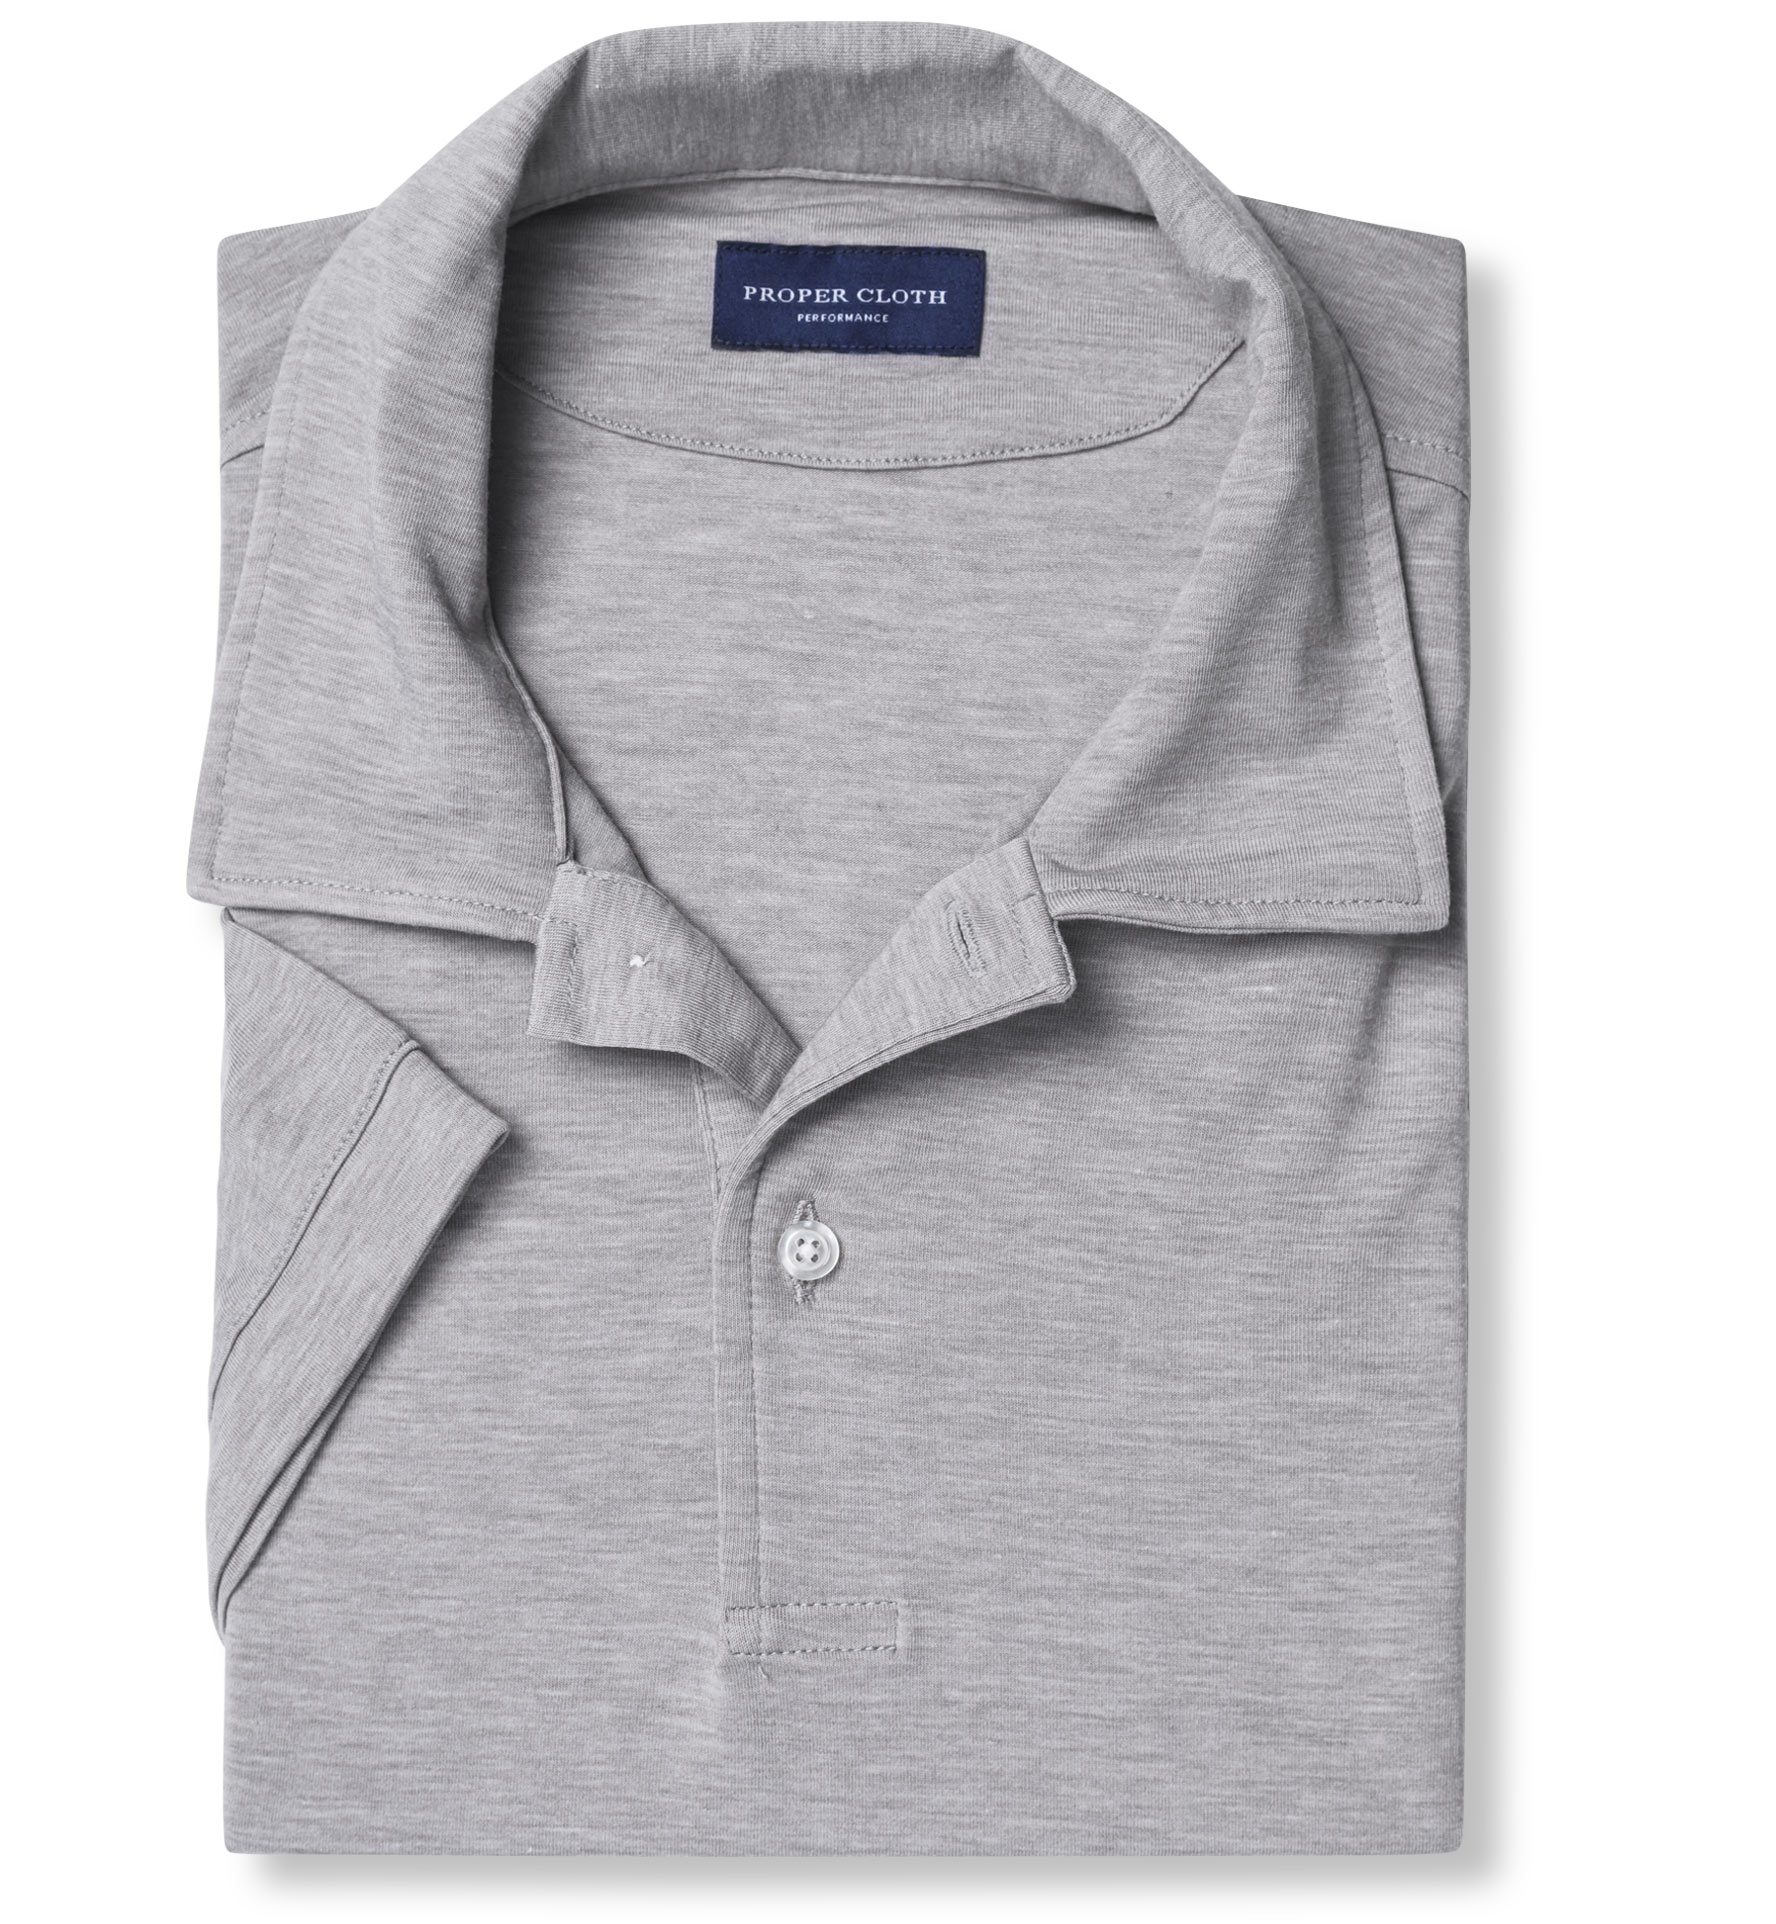 Light Grey Performance Knit Jersey Shirt by Proper Cloth